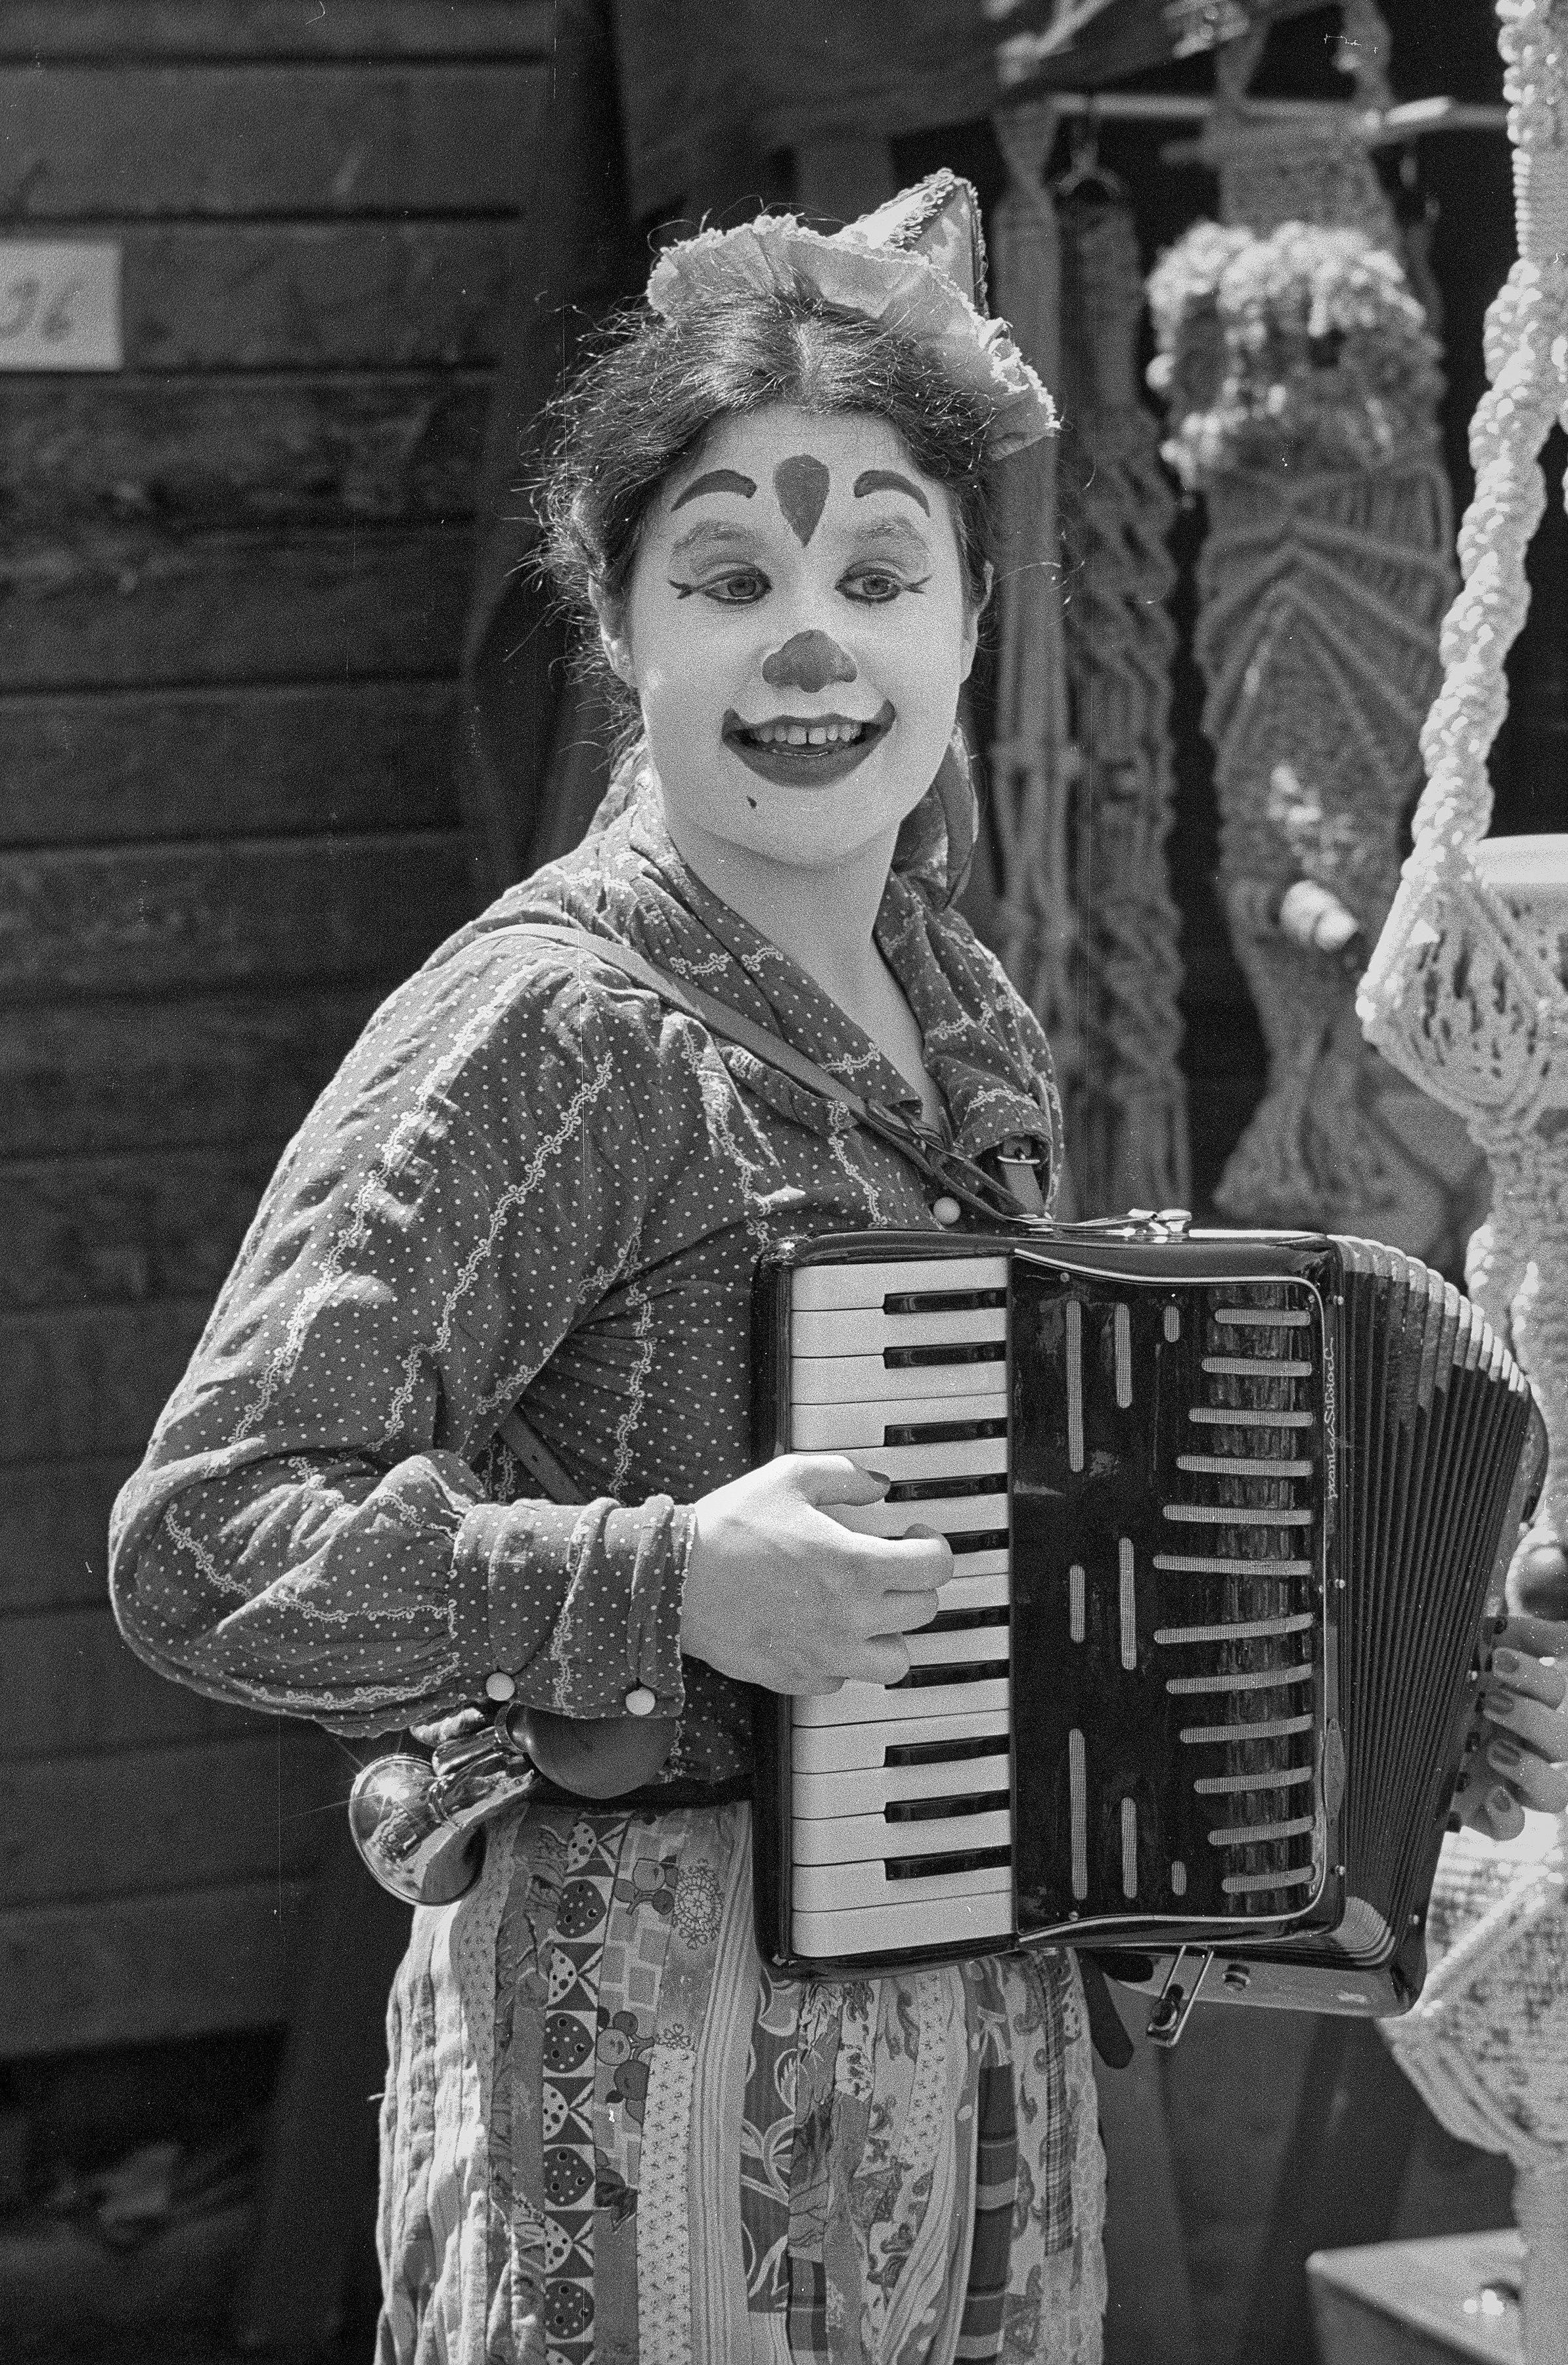 Clown acordian player.jpg